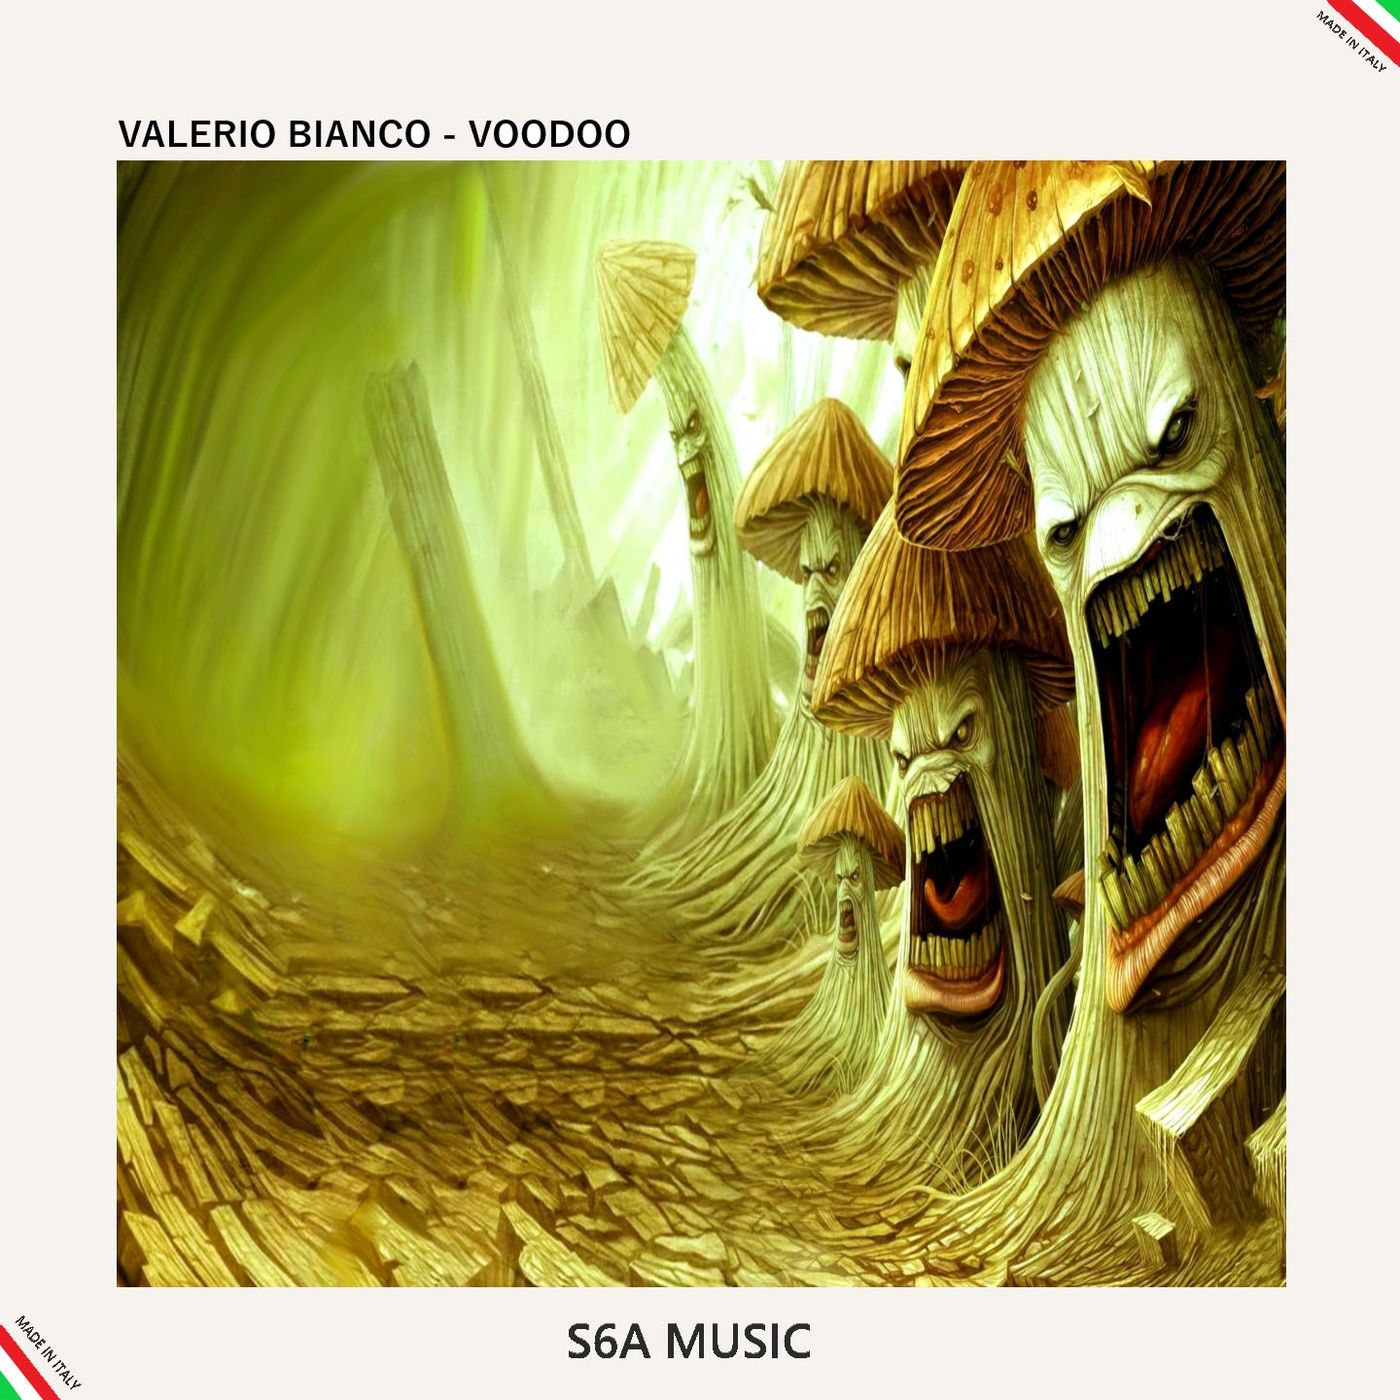 Valerio Bianco - Voodoo / S6A Music